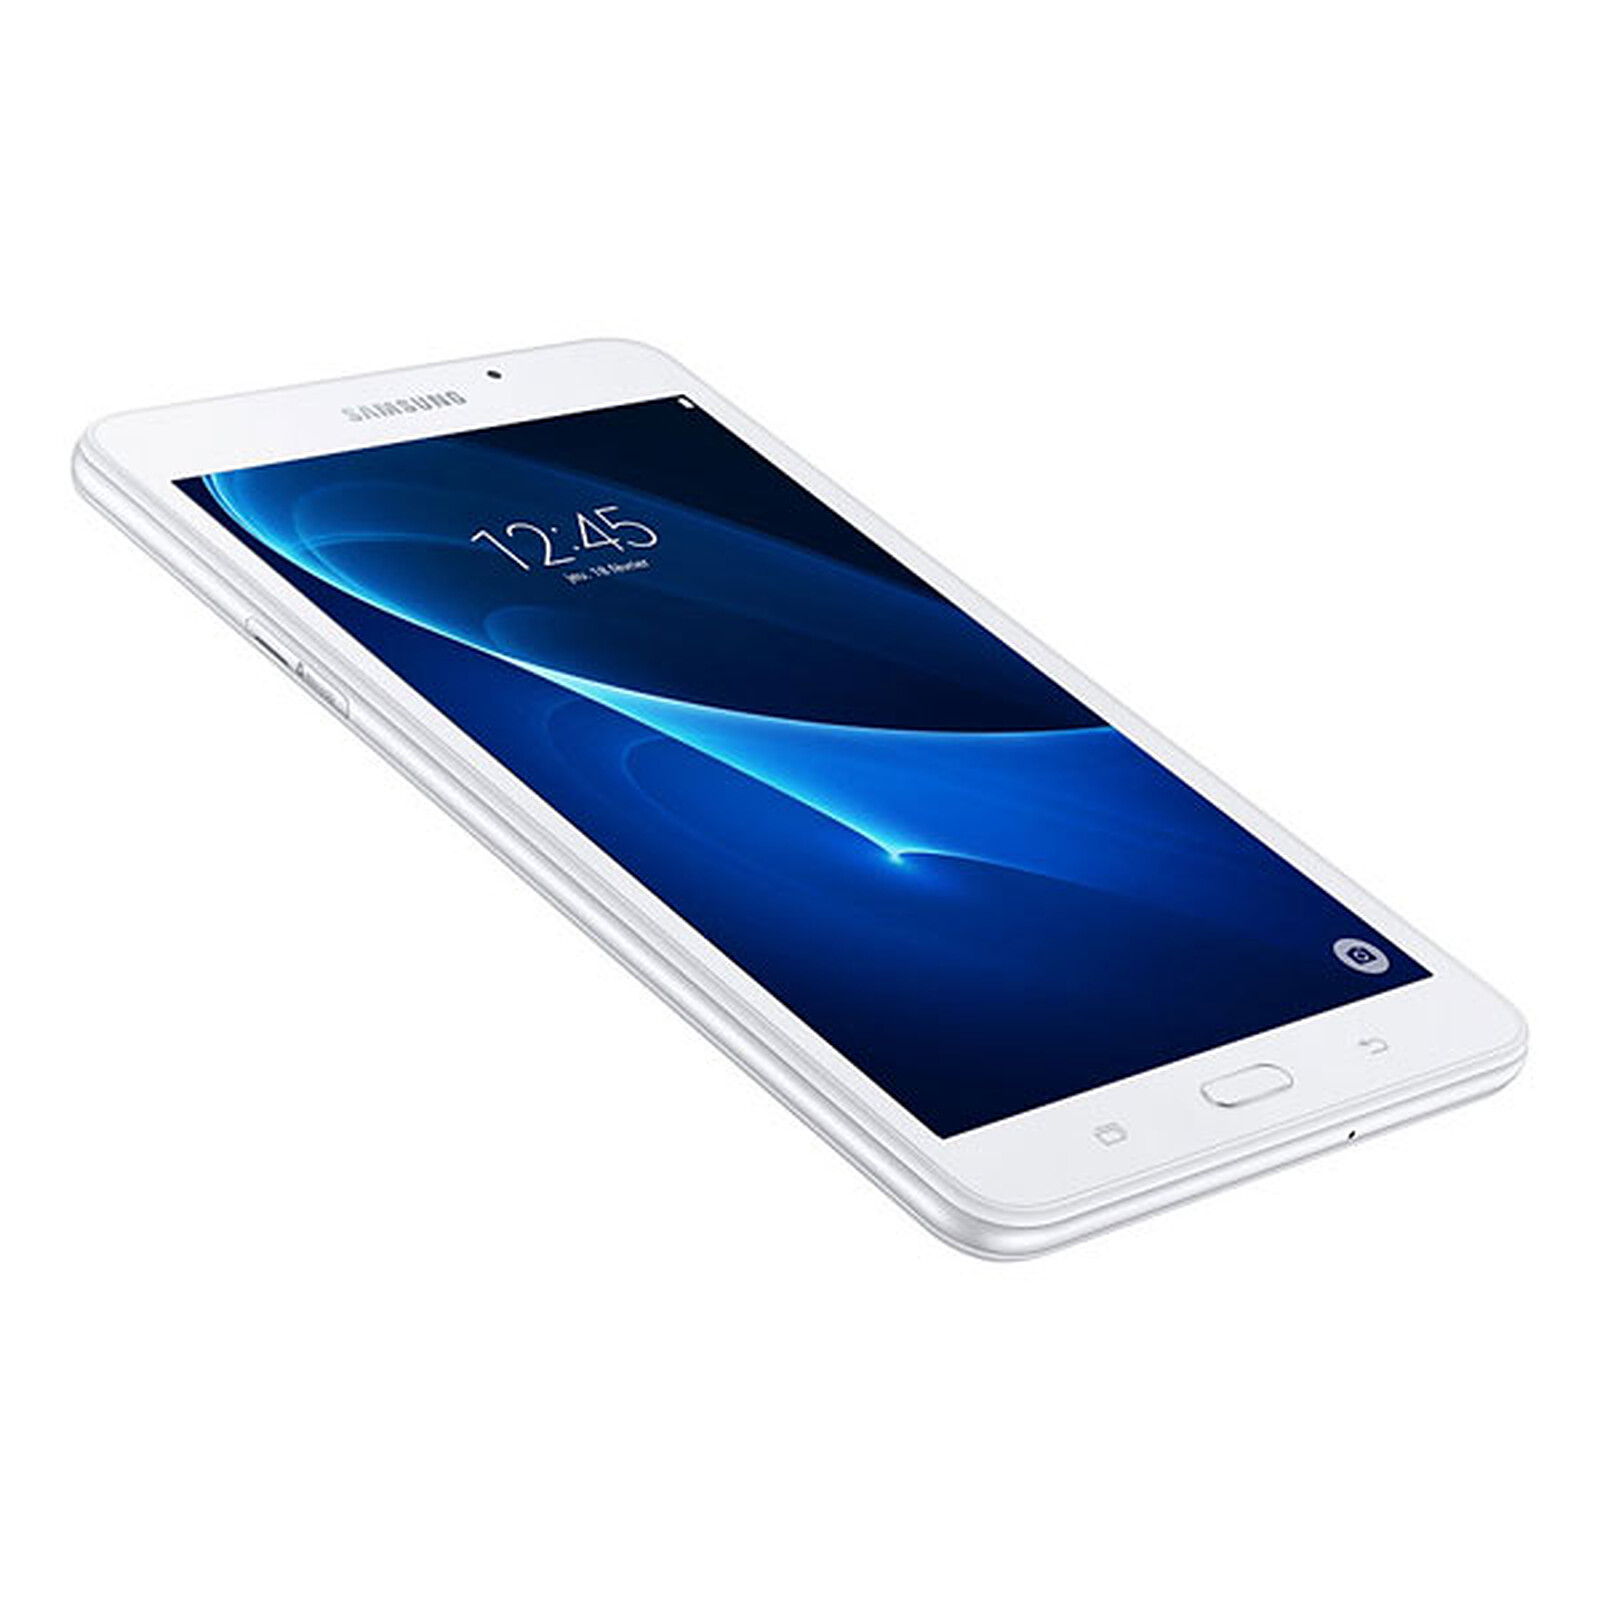 Samsung Galaxy Tab A 8 SM-T295 32 Go Noir 4G - Tablette tactile - LDLC